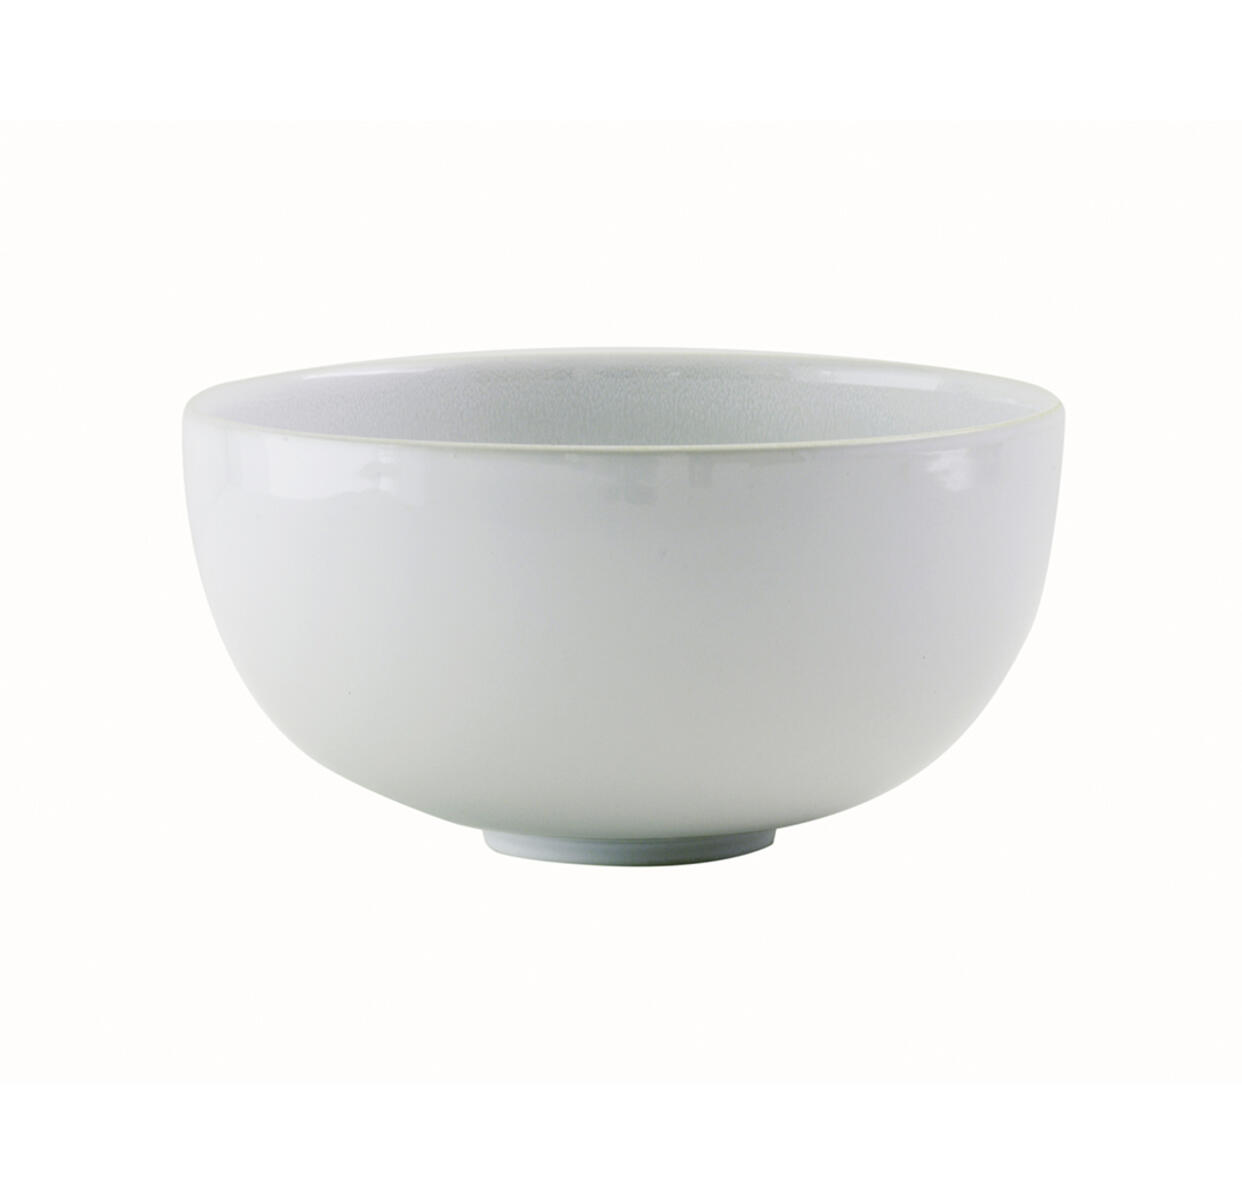 serving bowl s tourron neige ceramic manufacturer